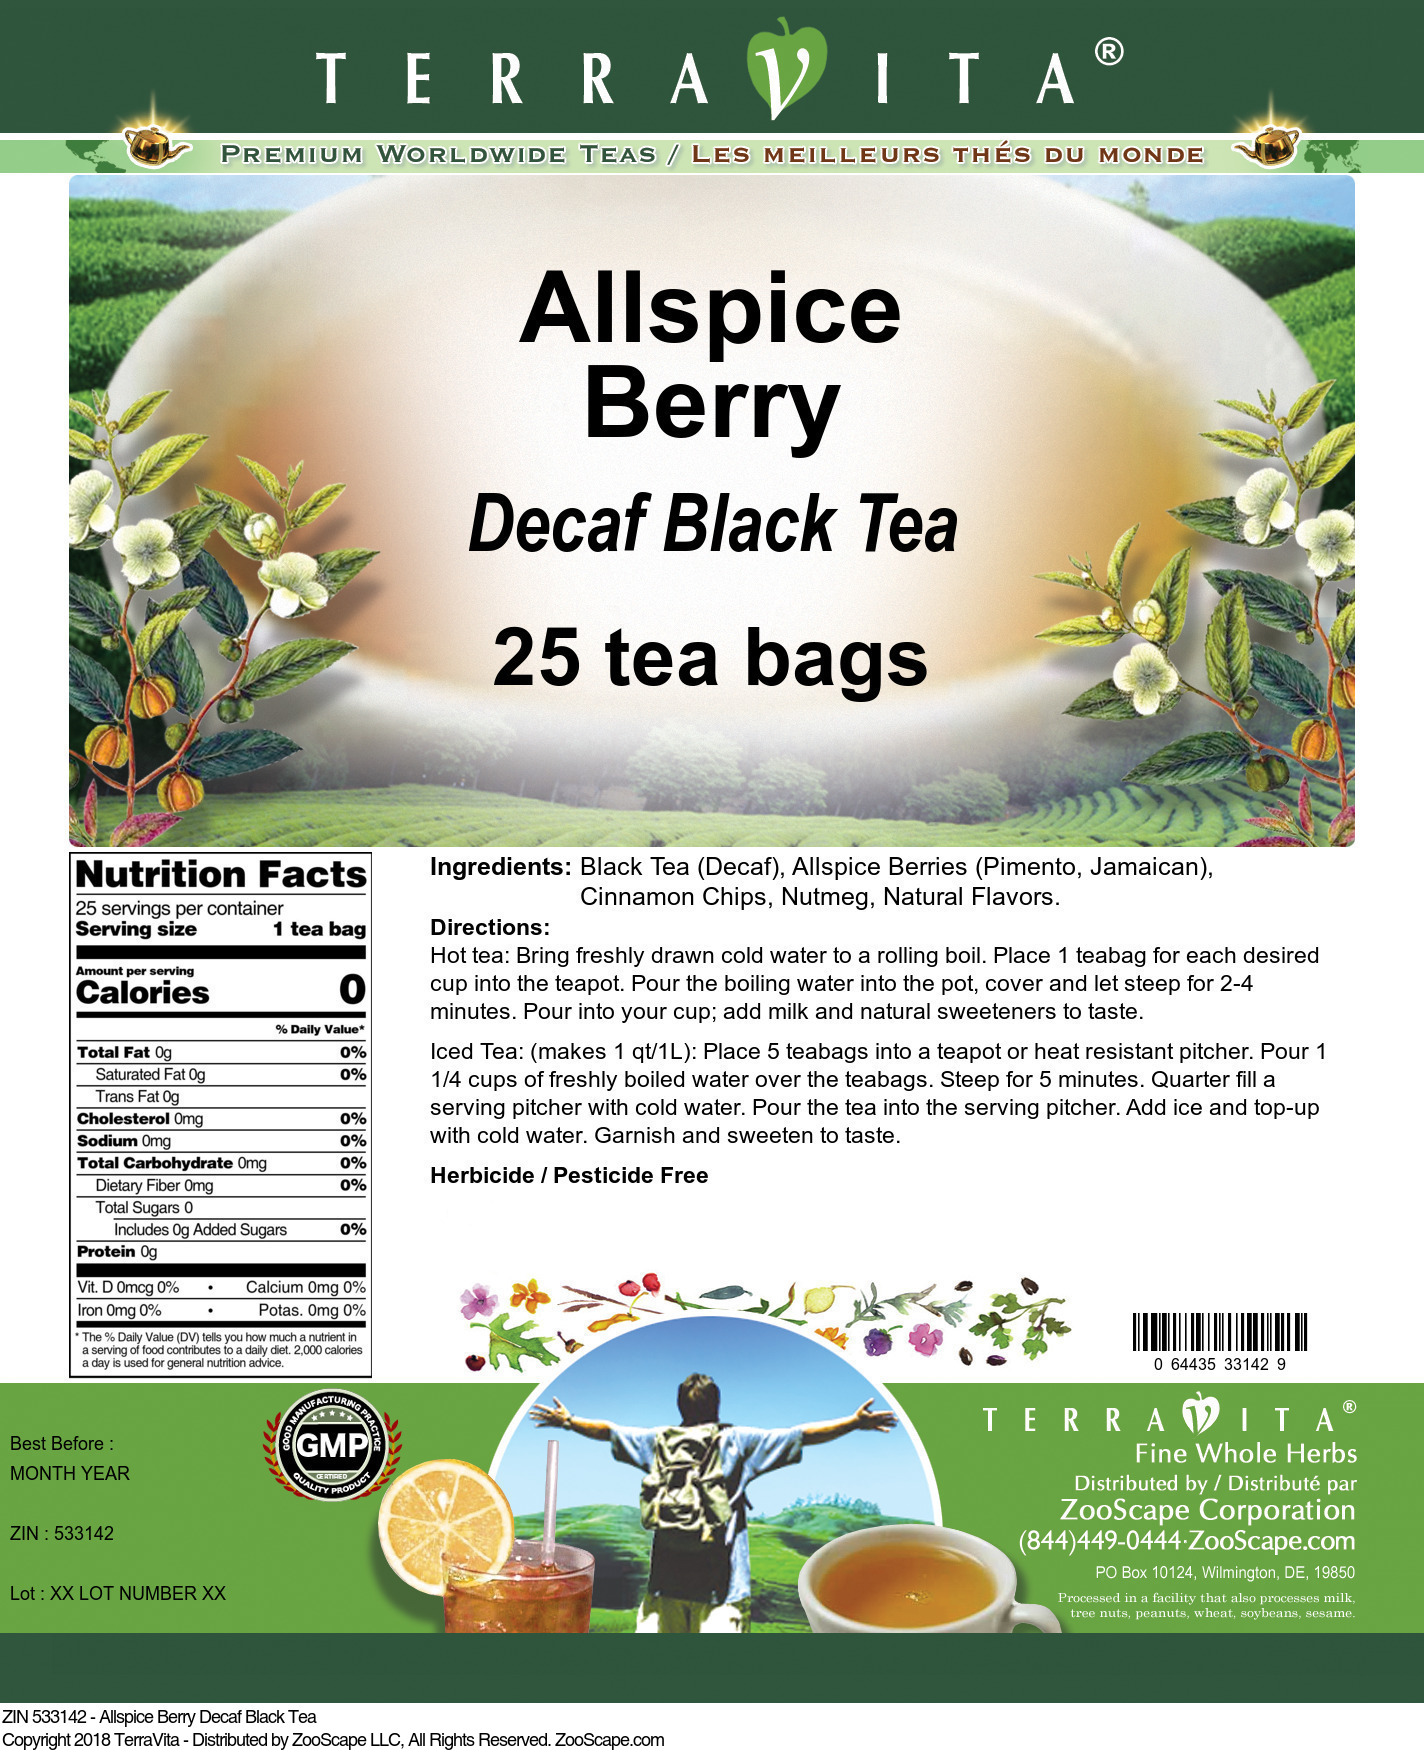 Allspice Berry Decaf Black Tea - Label